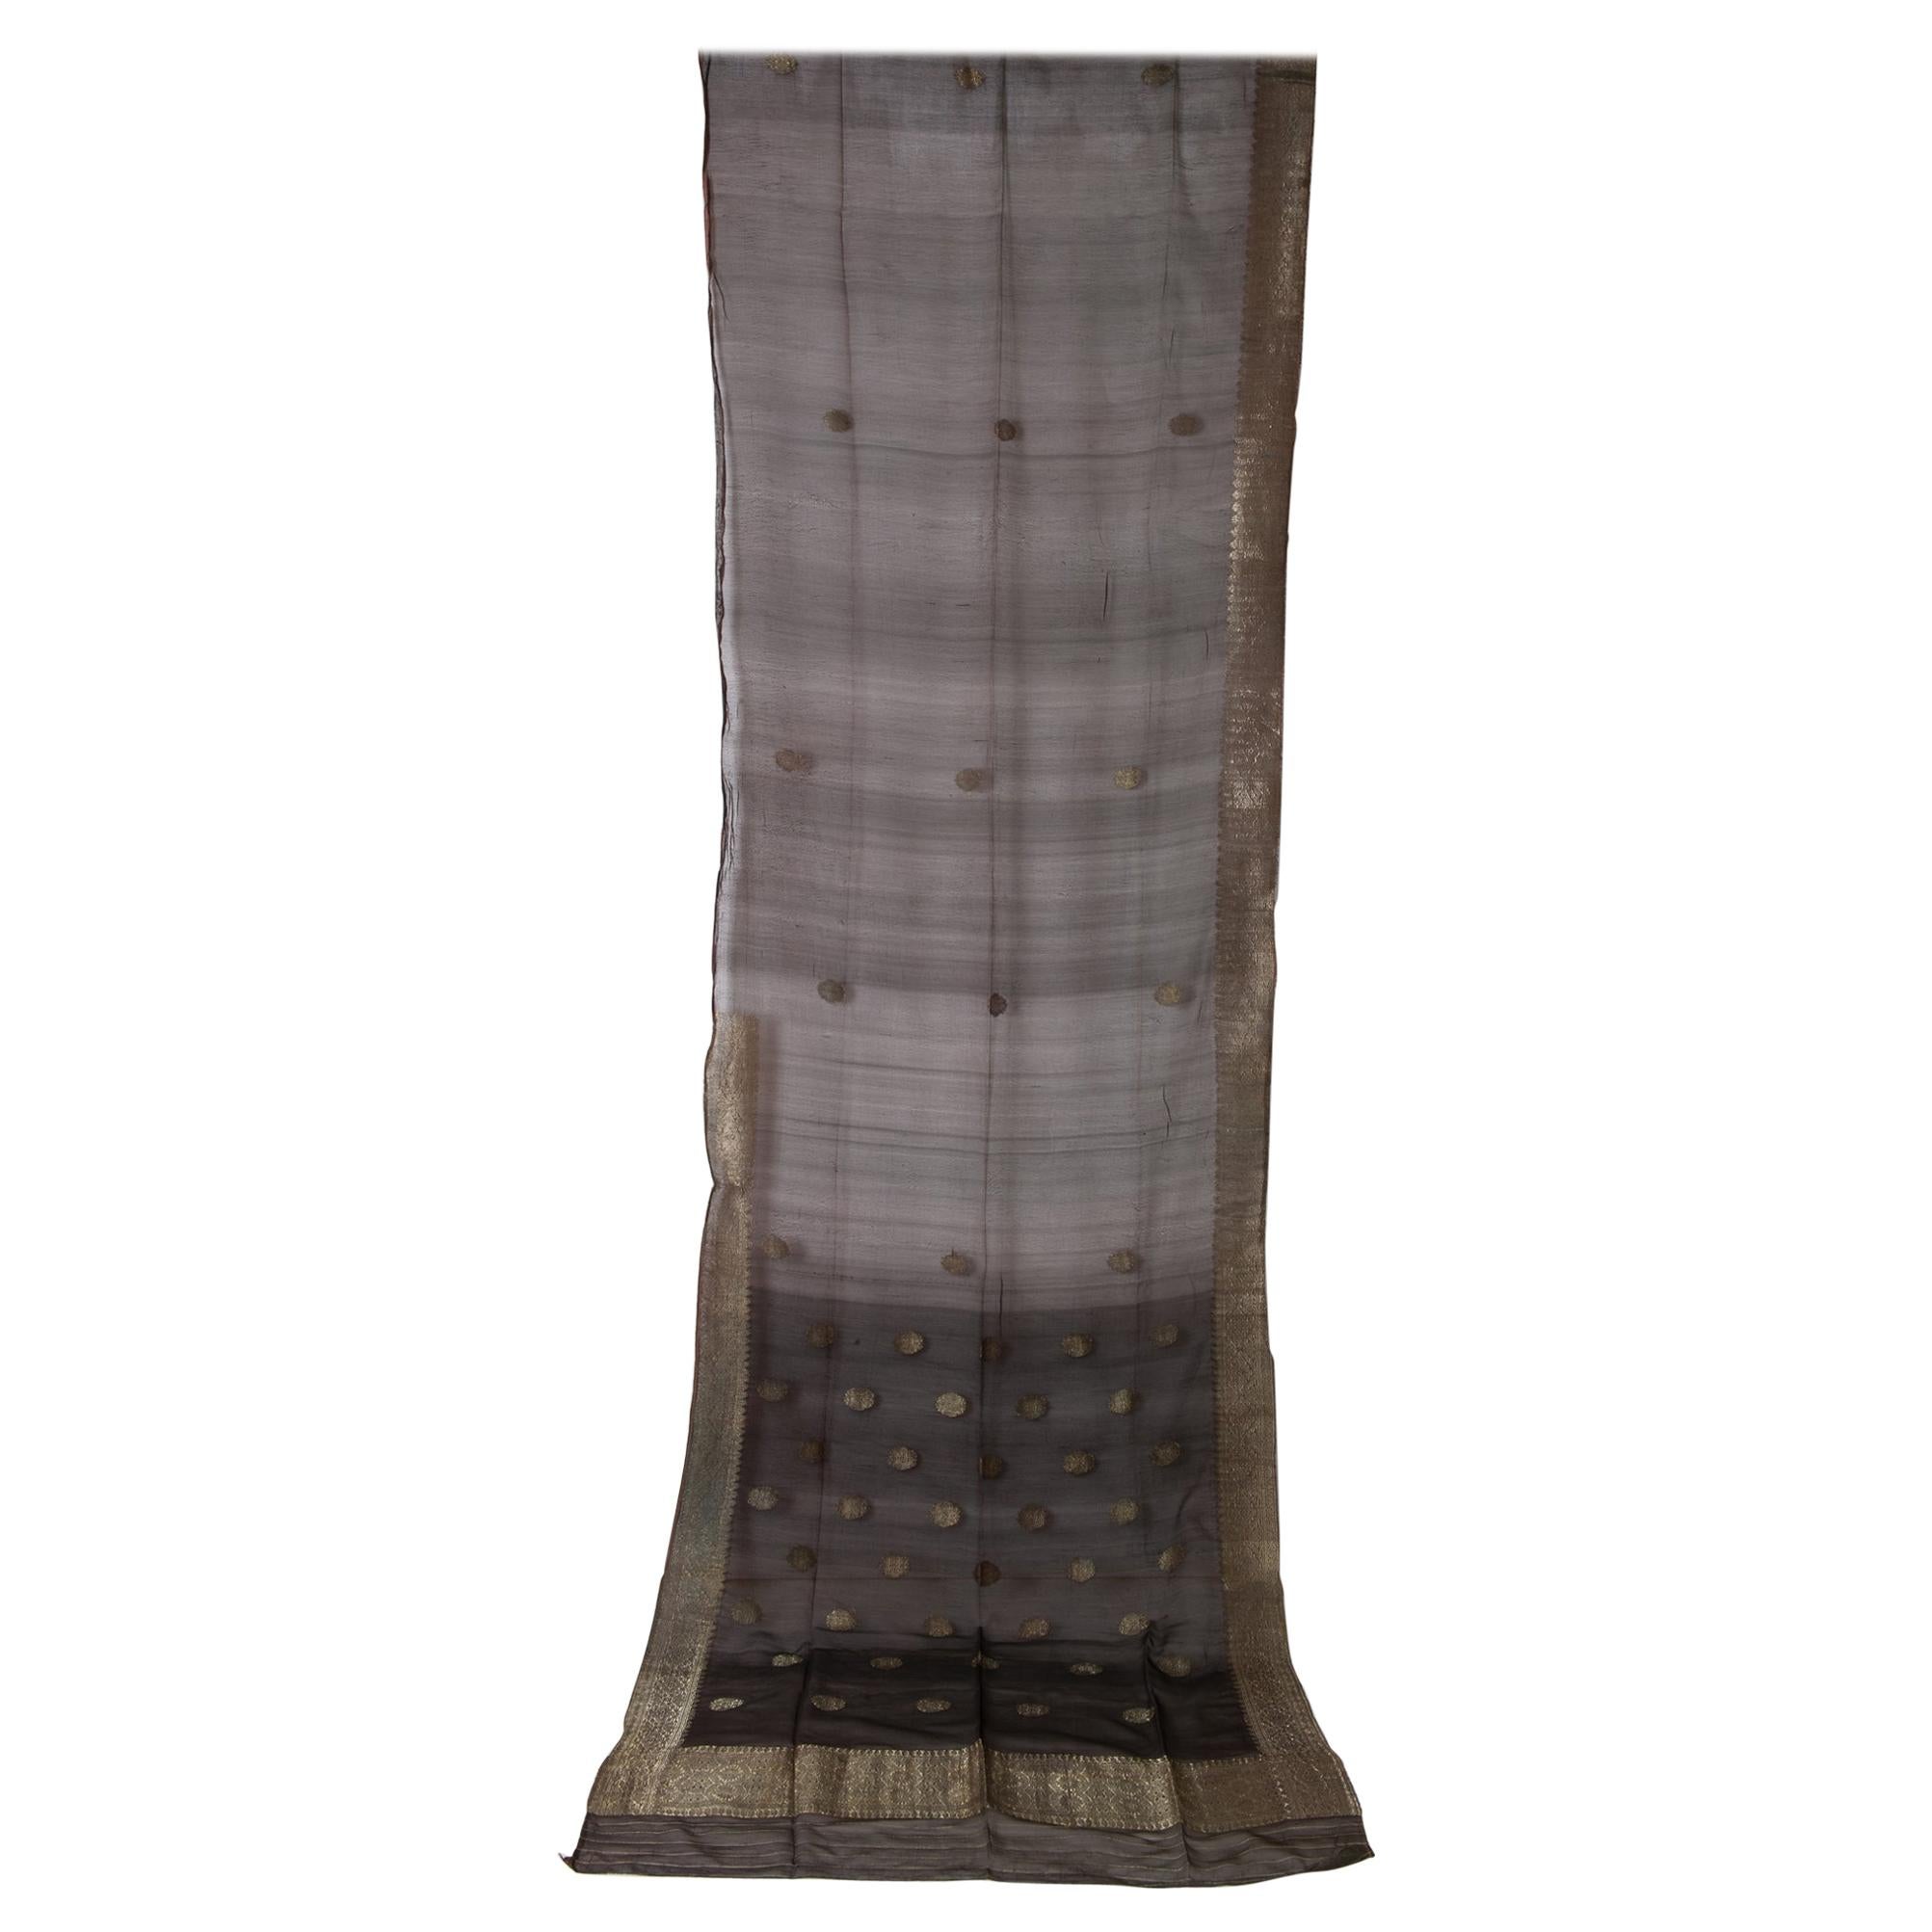 Vintage Indian Sari Dark Brown Color, Unusual Curtains or an Evening Dress